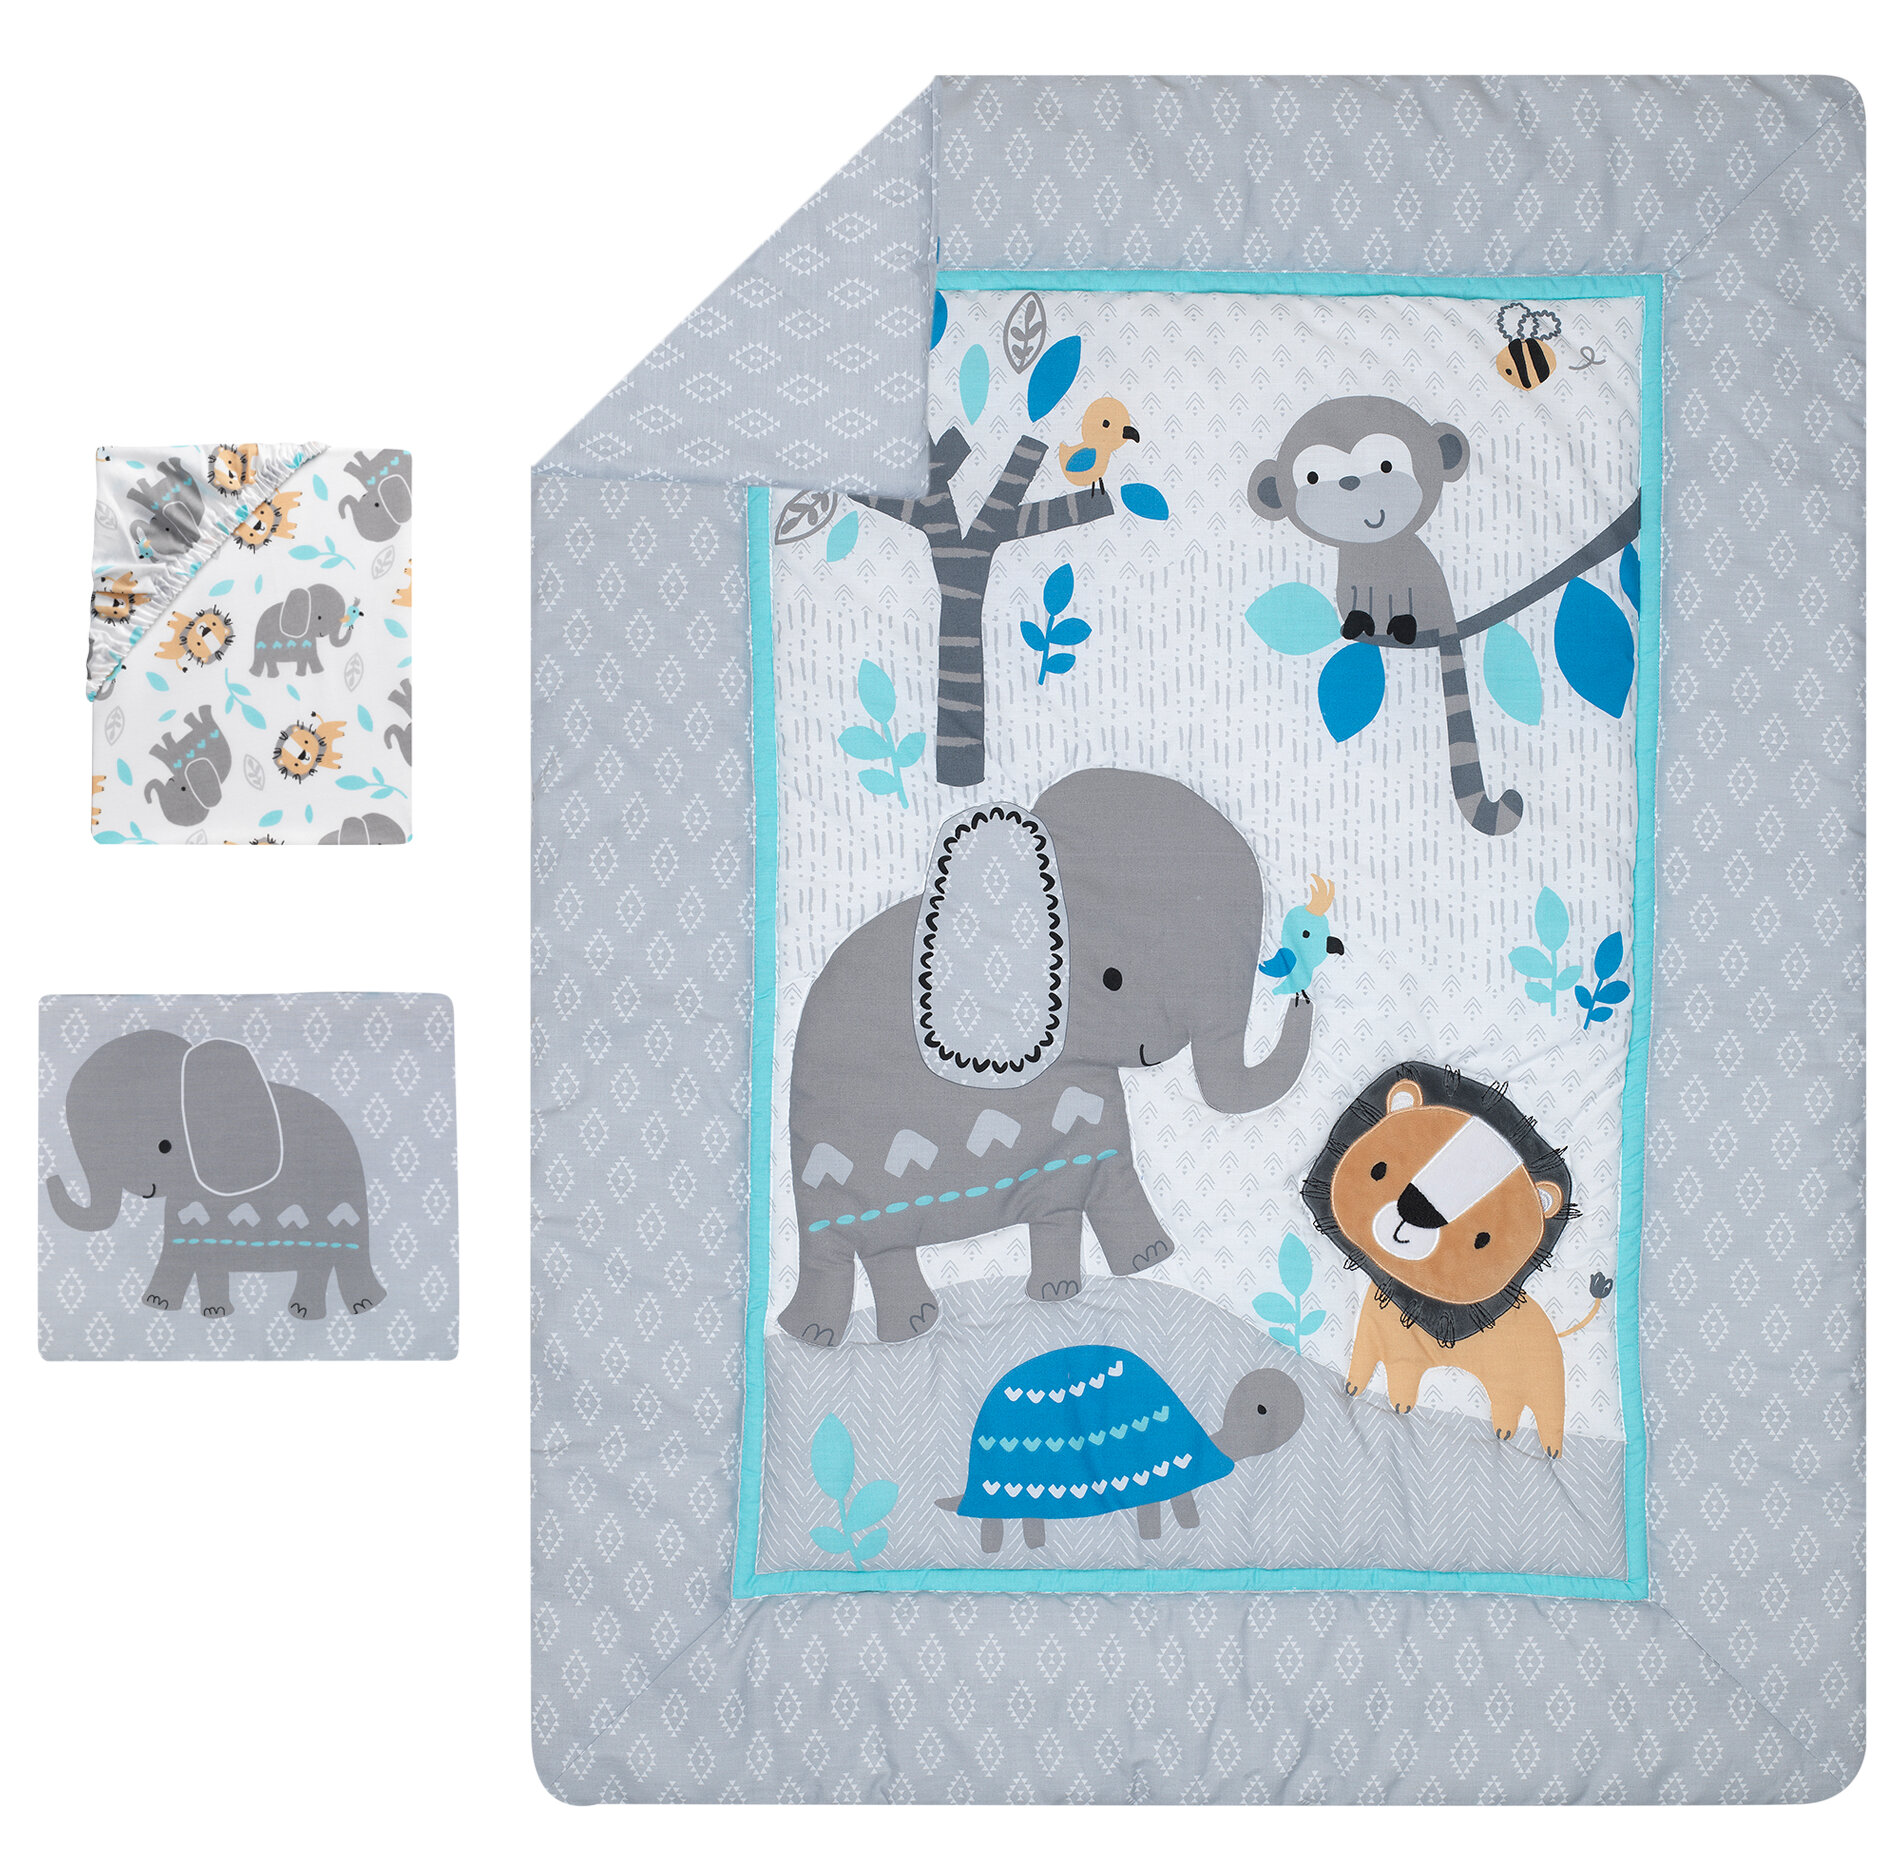 Blue Elephant Santa Barbara Design Studio Blanket Toy Set 